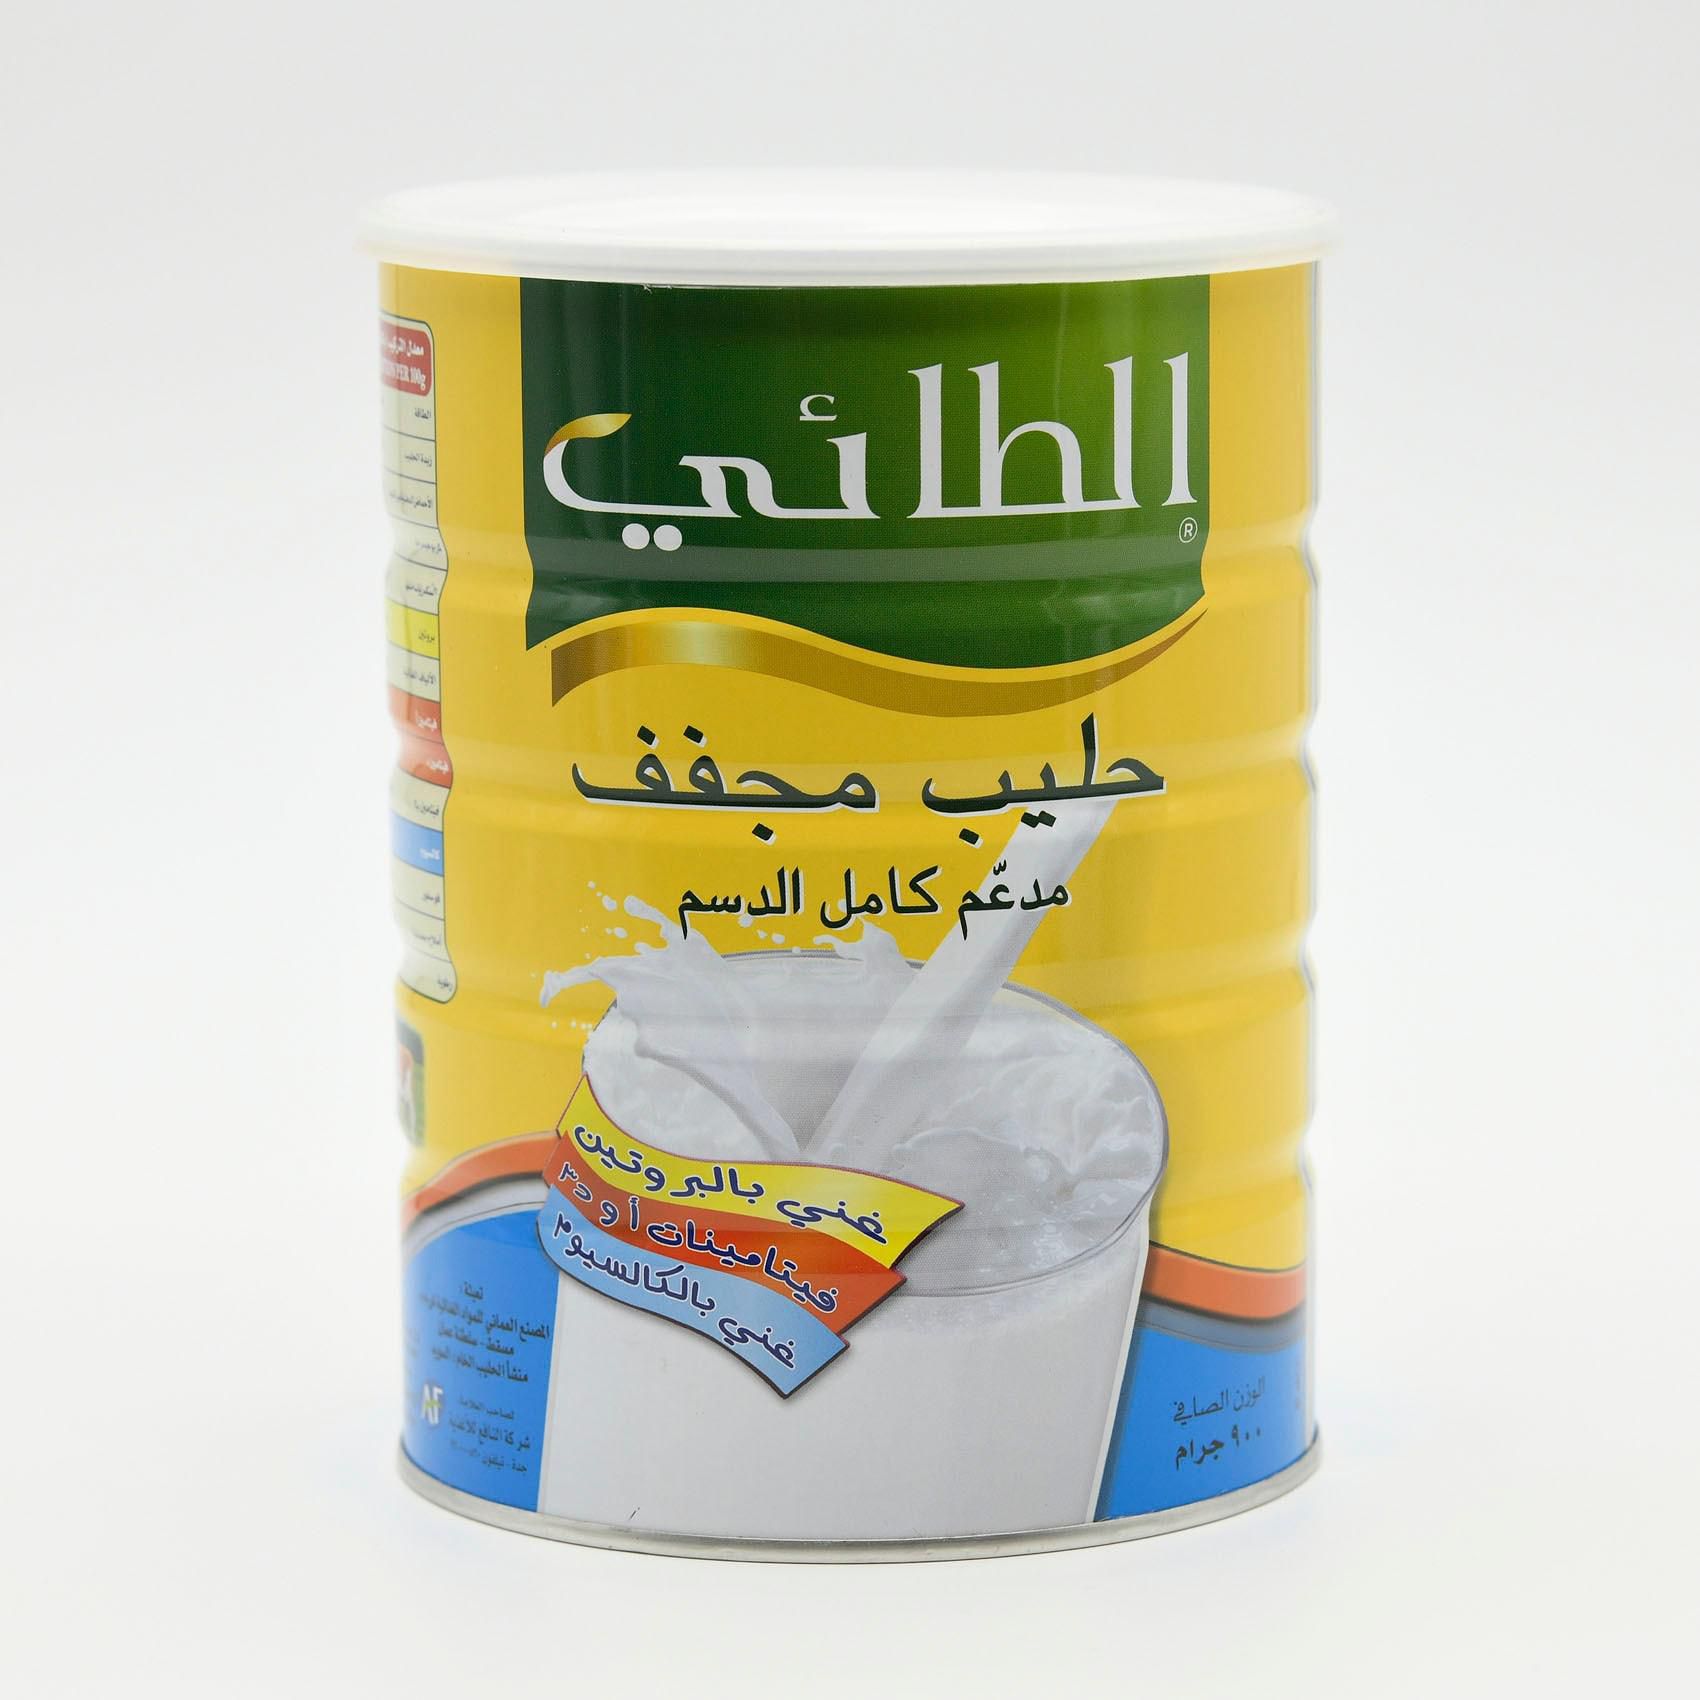 Al taie full cream milk powder 900 g